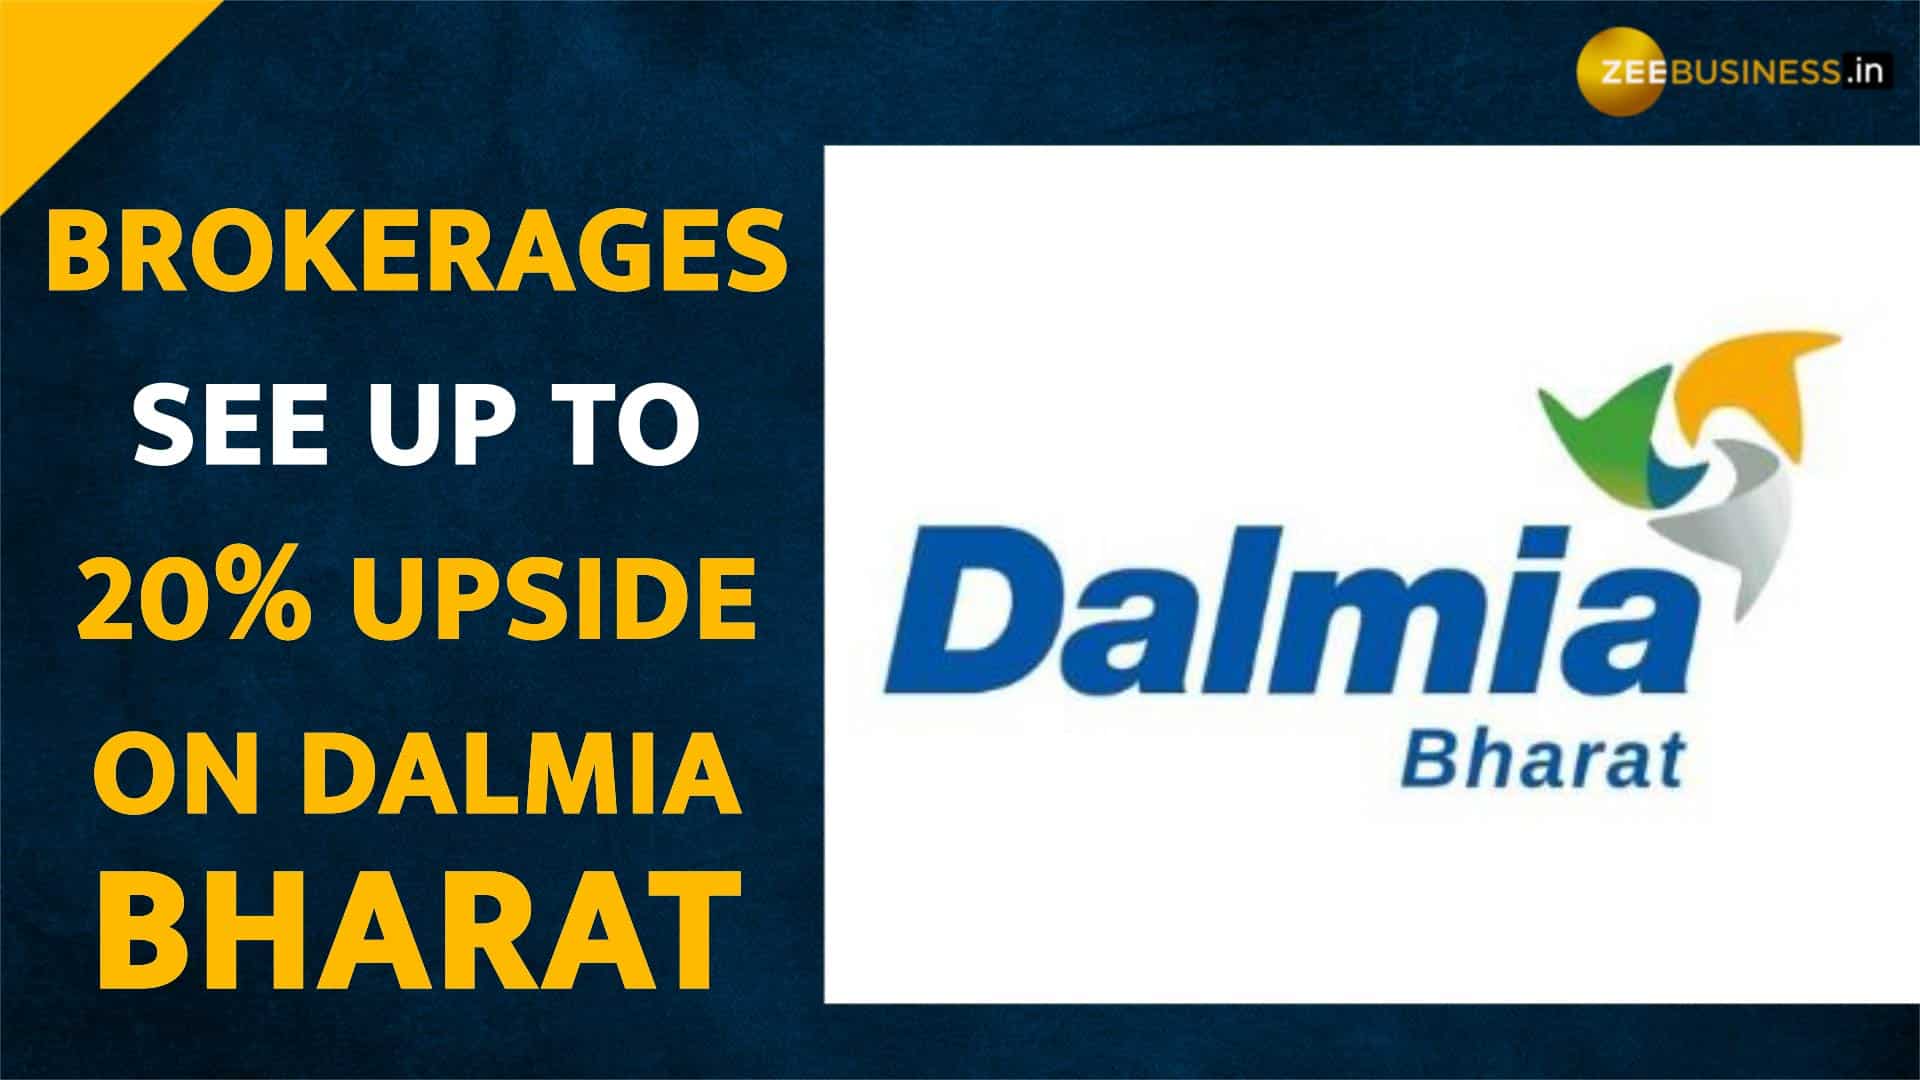 Dalmia Bharat Limited on LinkedIn: #awards #innovation #lifeatdalmiabharat  #dalmiabharat #dalmiacement | 28 comments